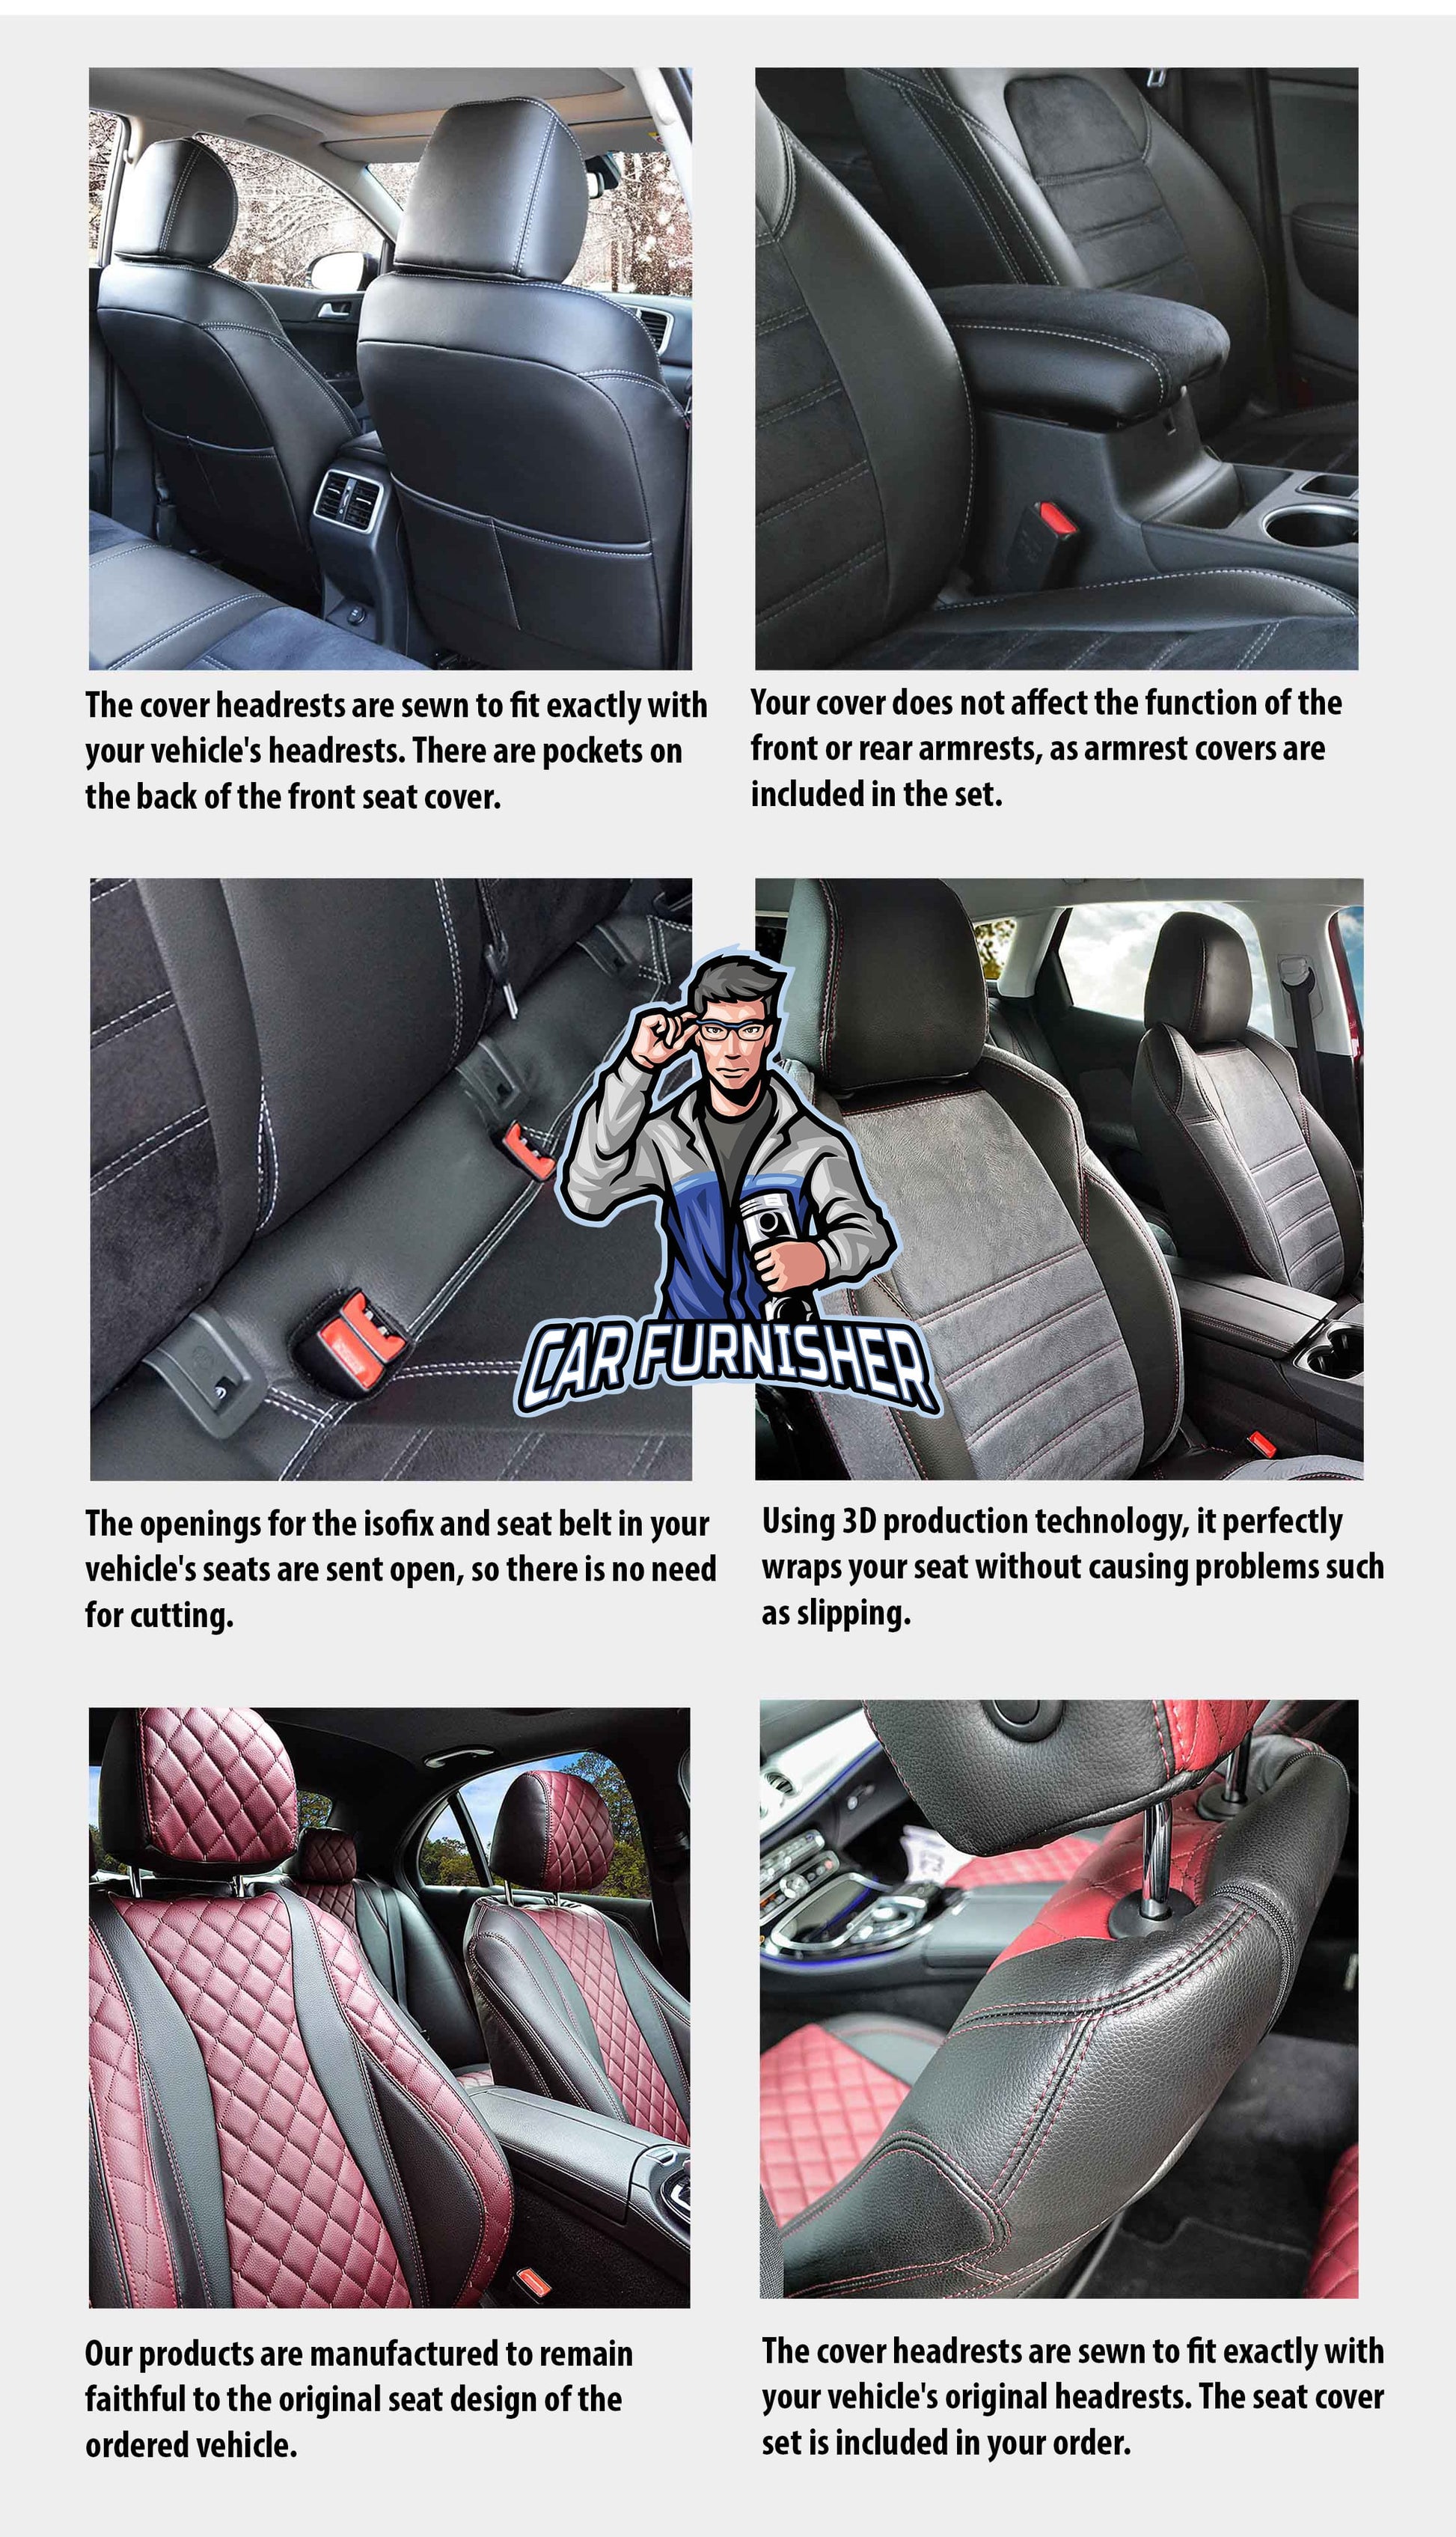 Fiat Marea Seat Covers Madrid Leather Design Beige Leather